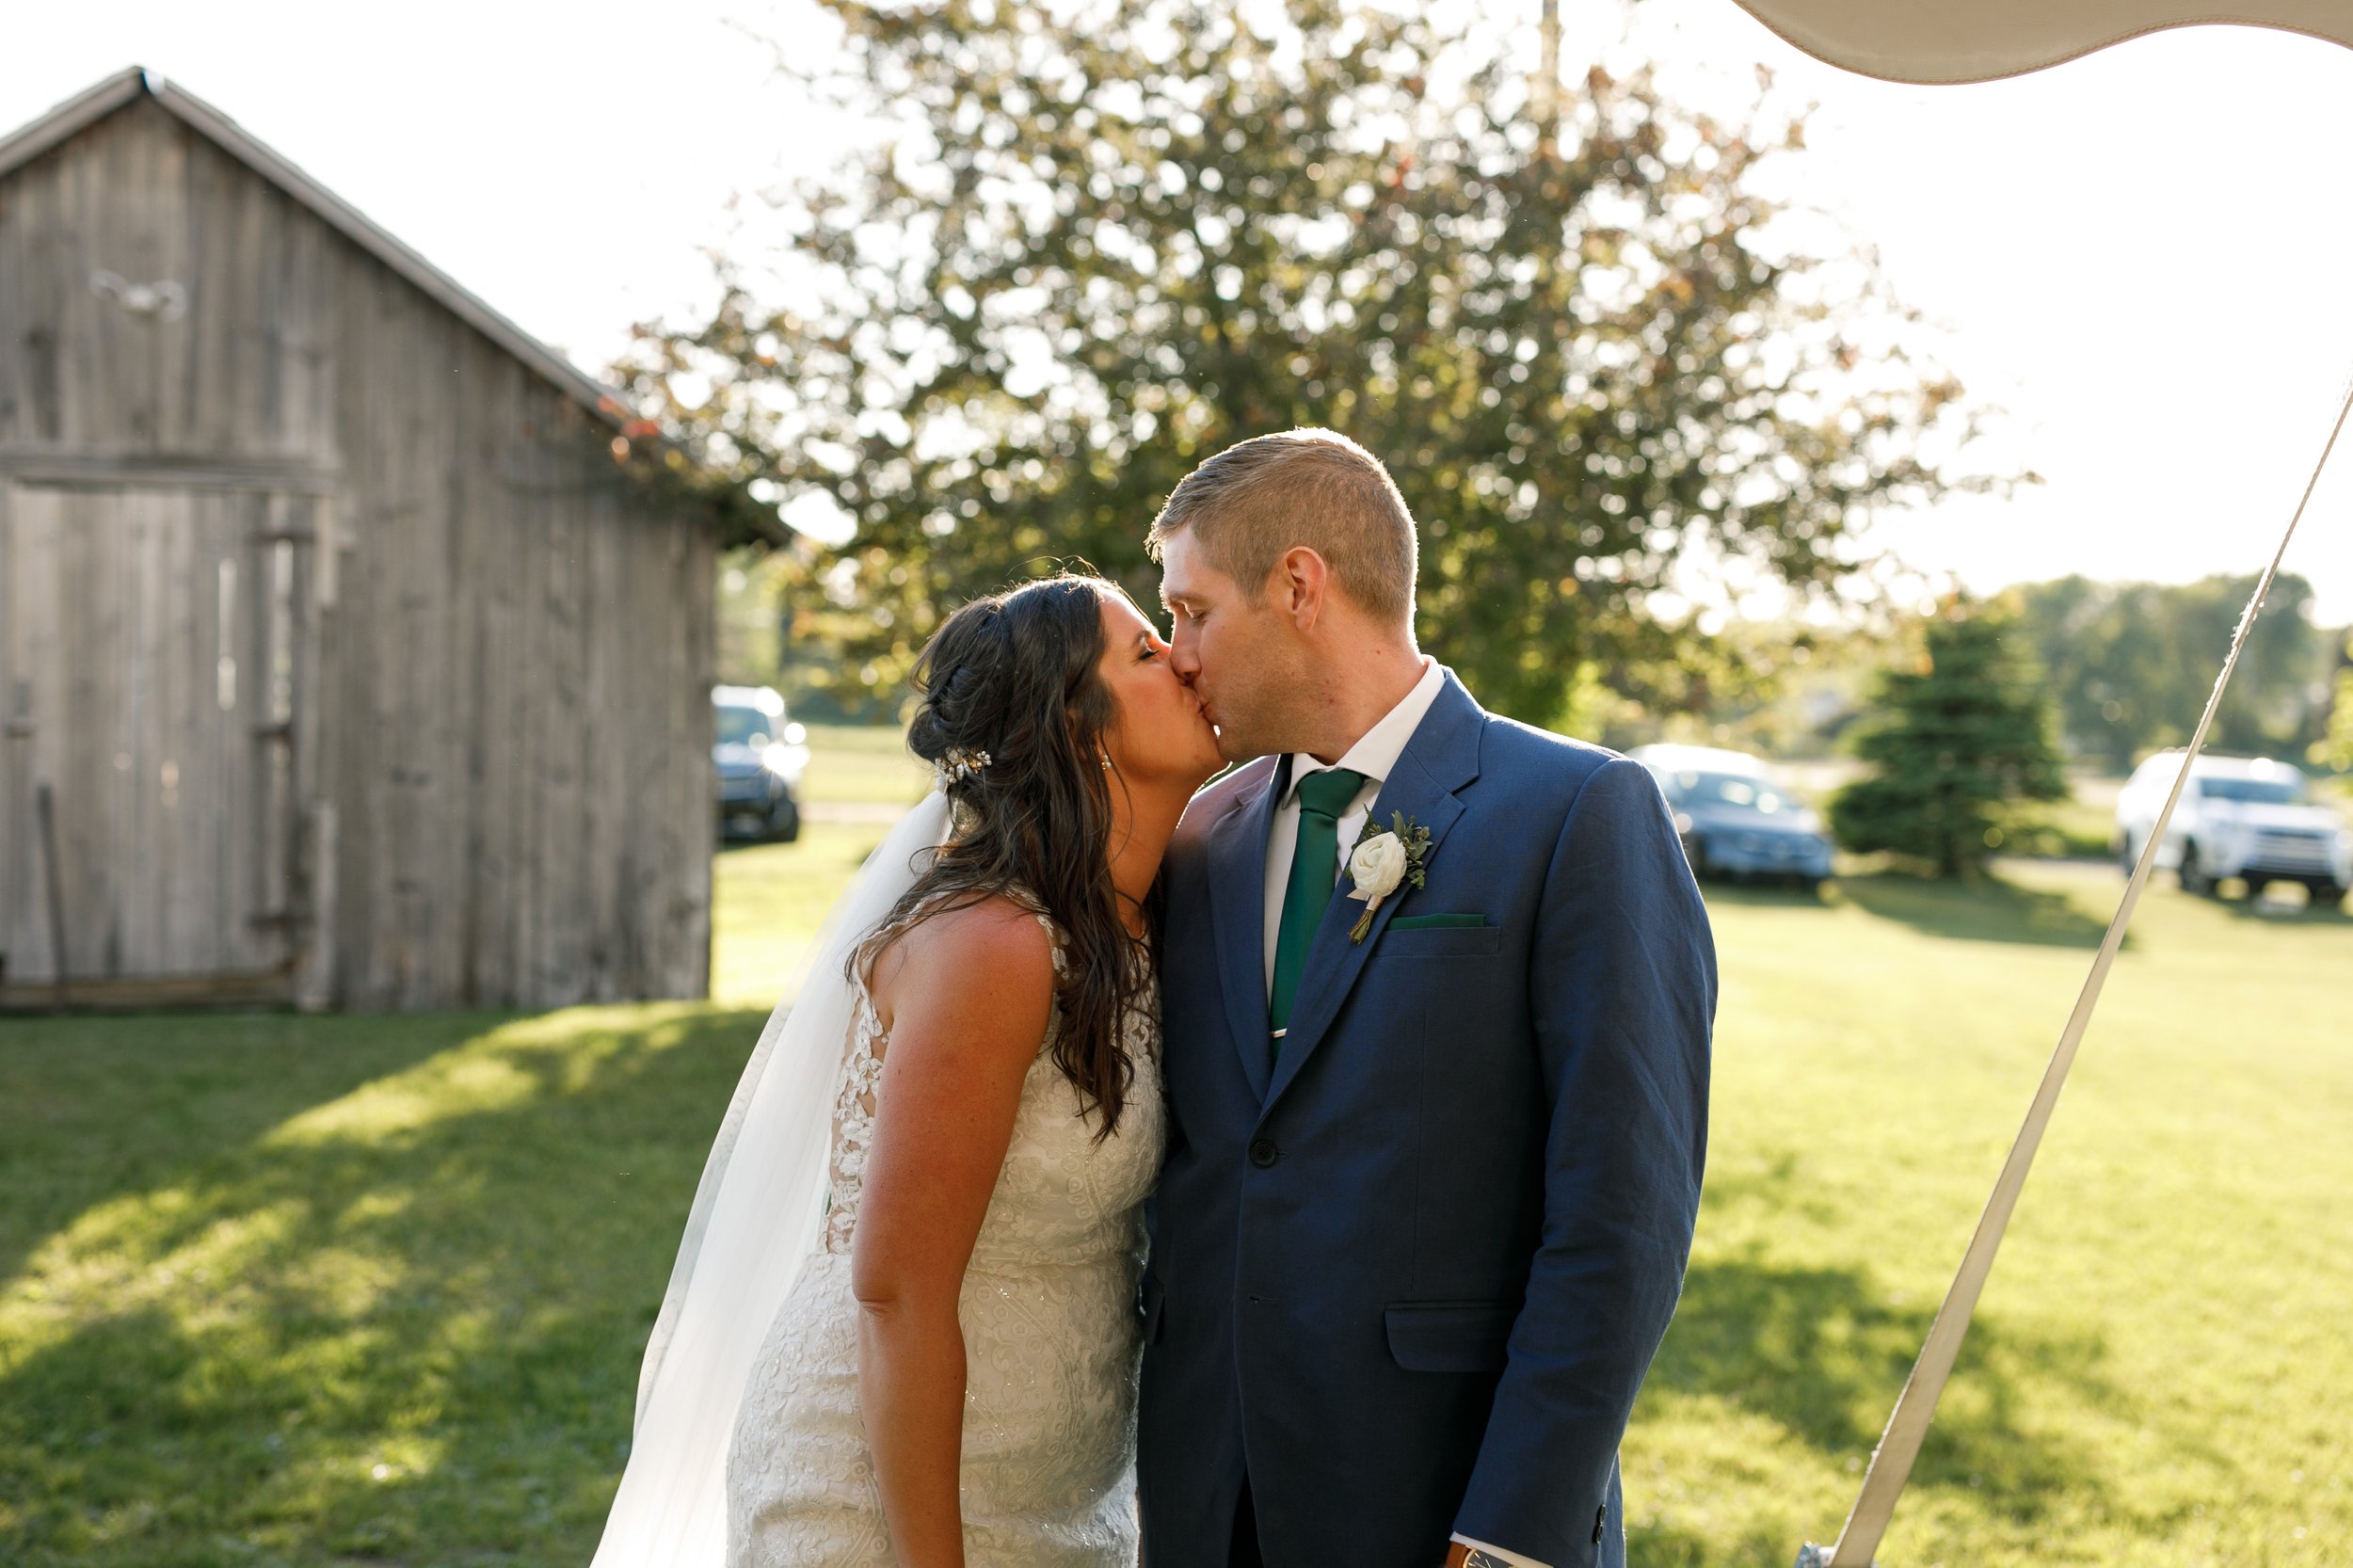 Sparta Wedding Photographer - Grand Rapids Wedding Photographer - Backyard Wedding - Jessica Darling - Ang and Kyle Wedding - J Darling Photo155.jpg